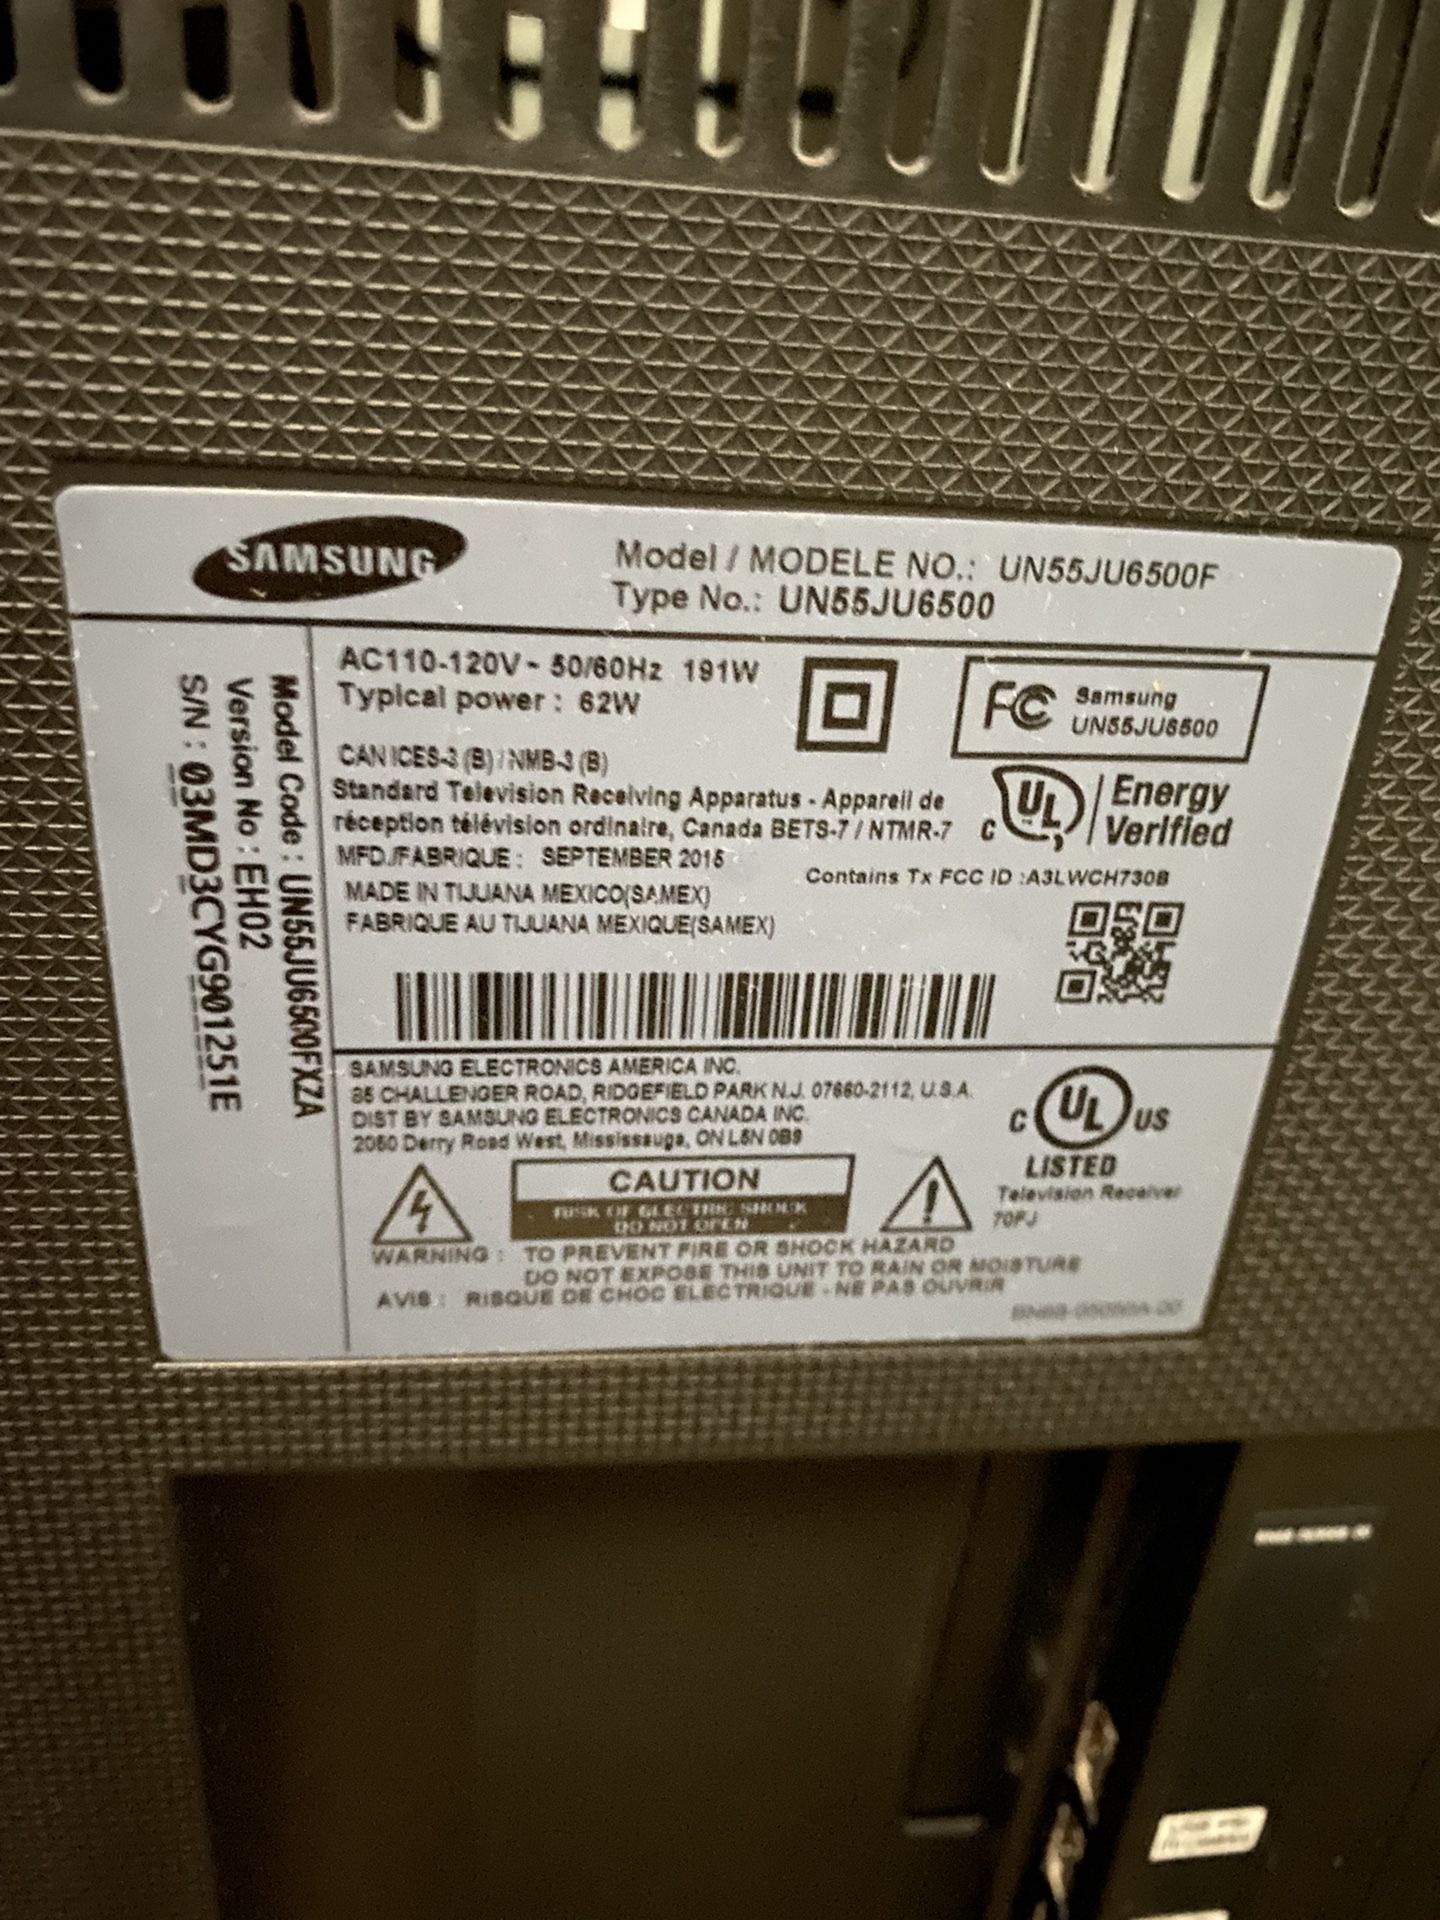 Samsung UN55JU6500 55-Inch 4K Ultra HD Smart LED TV